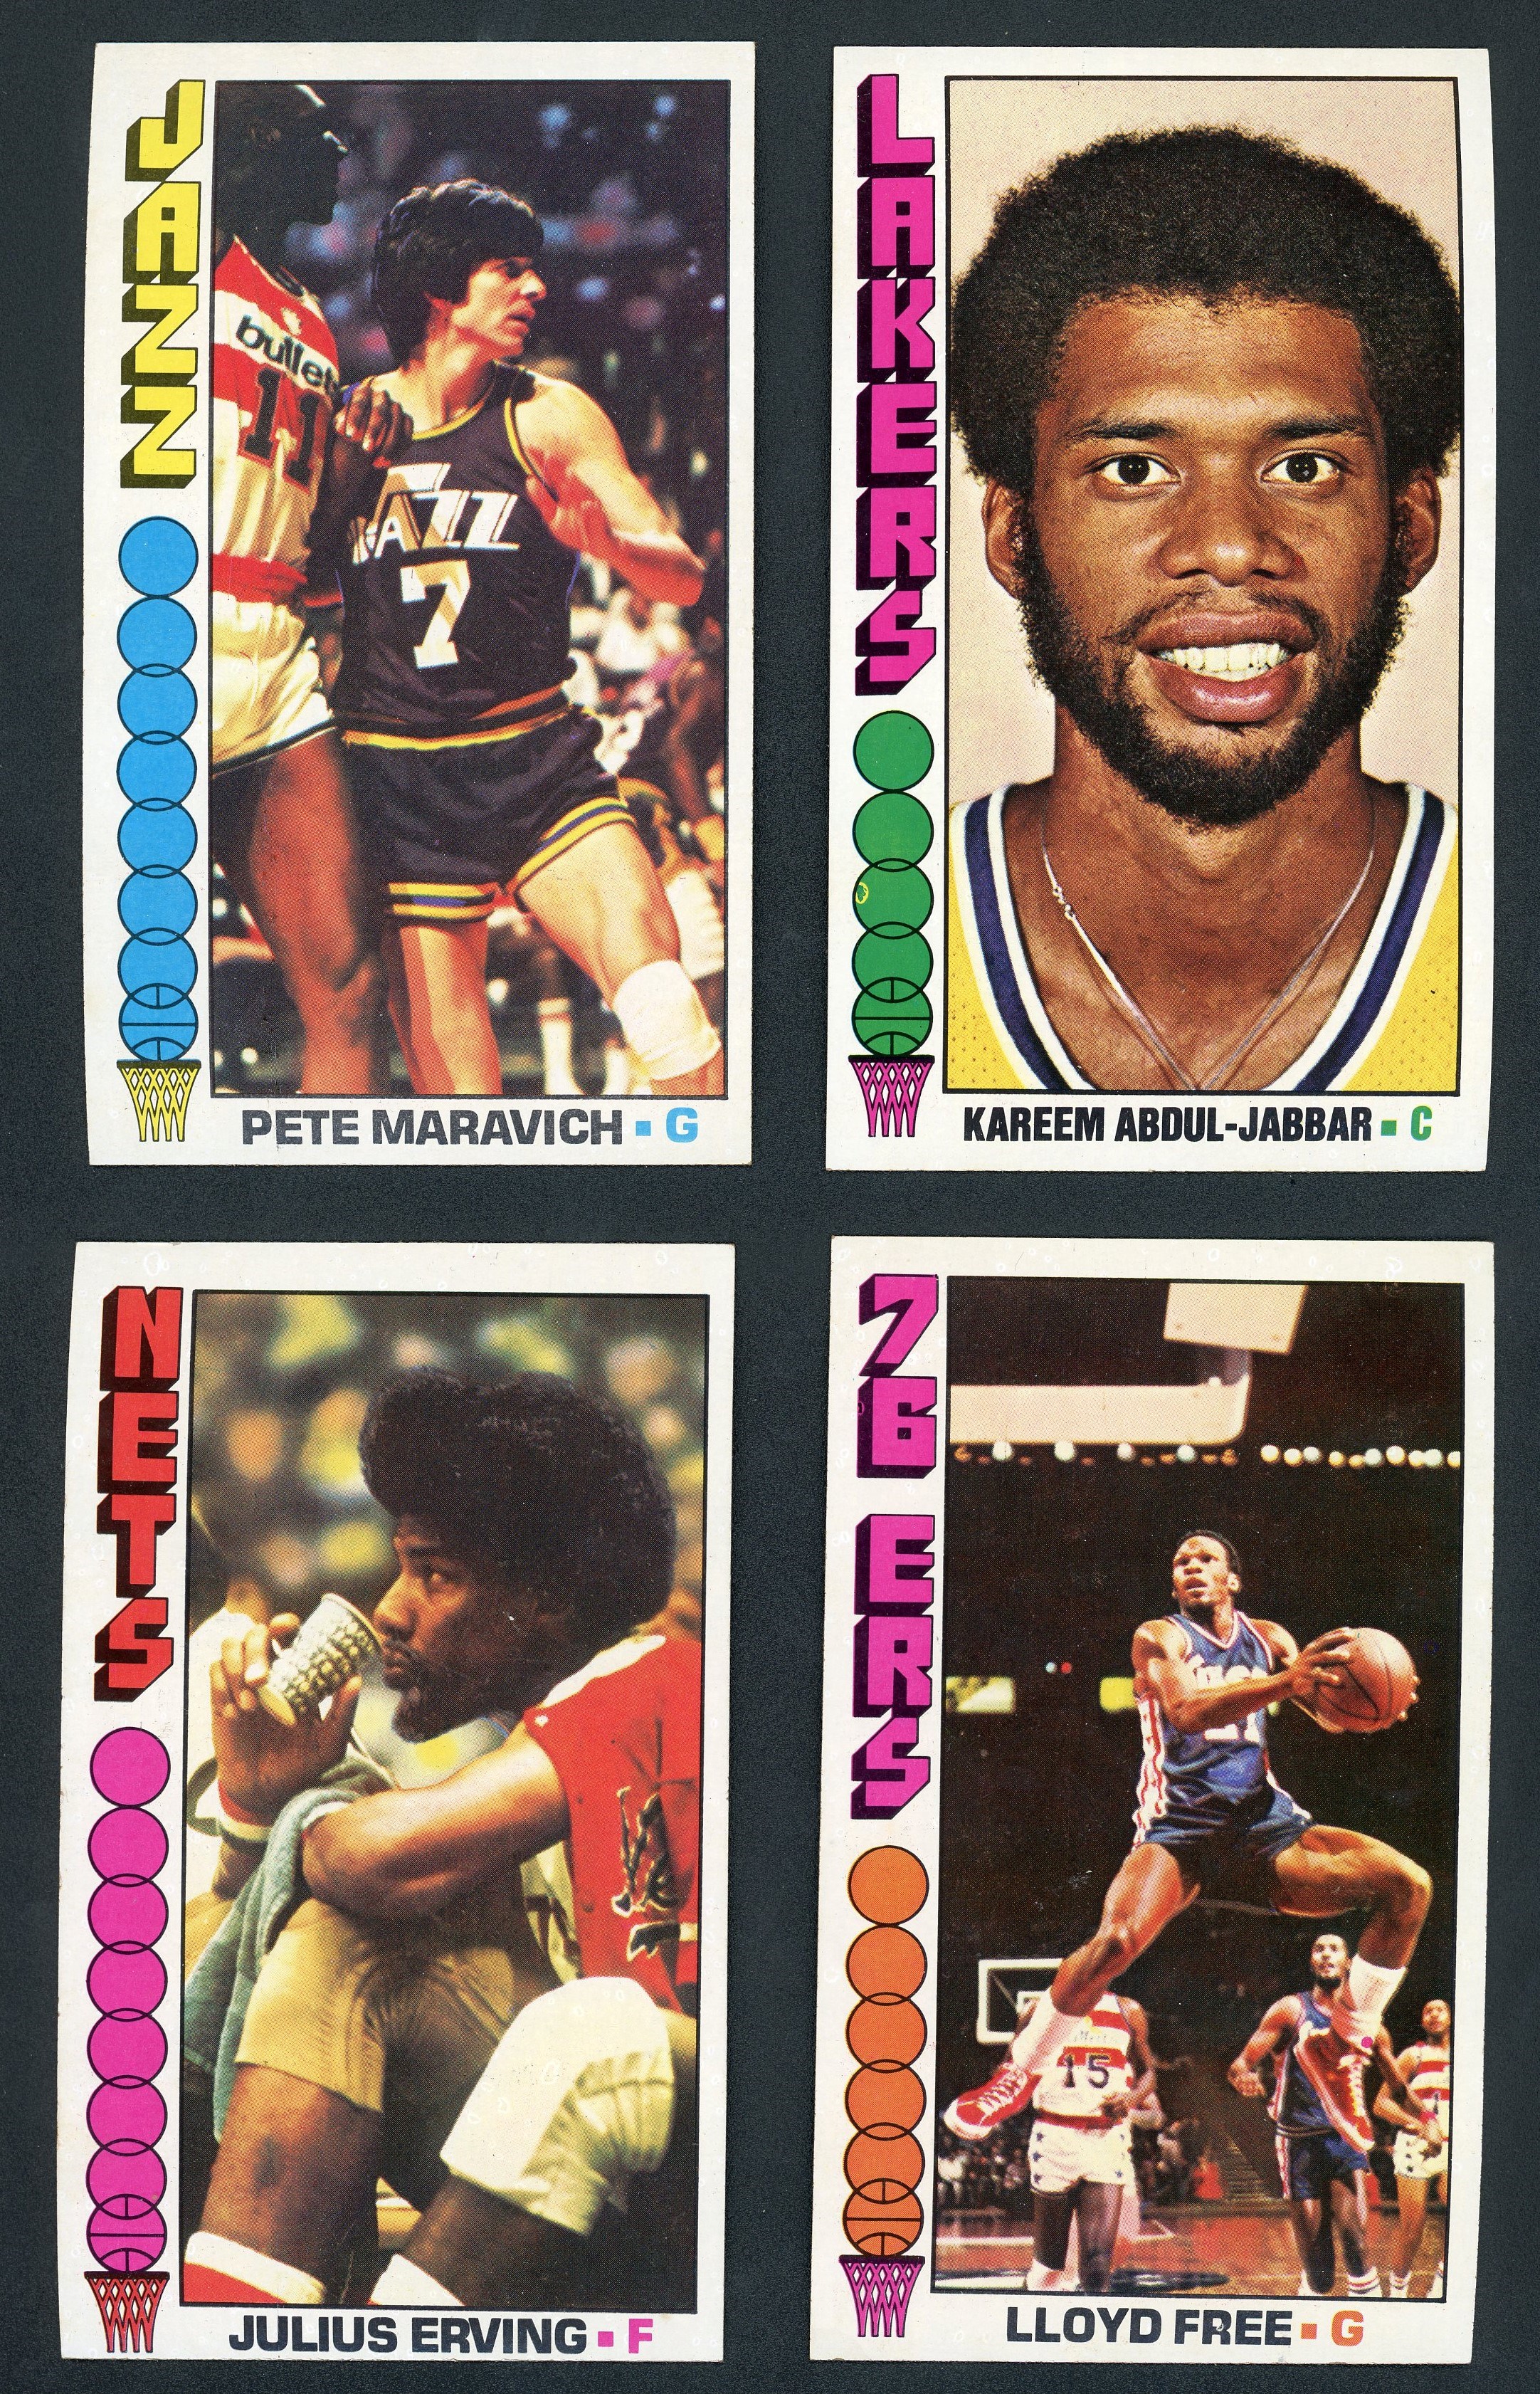 - 1976/77 Topps "Tall Boy" Basketball Complete Set